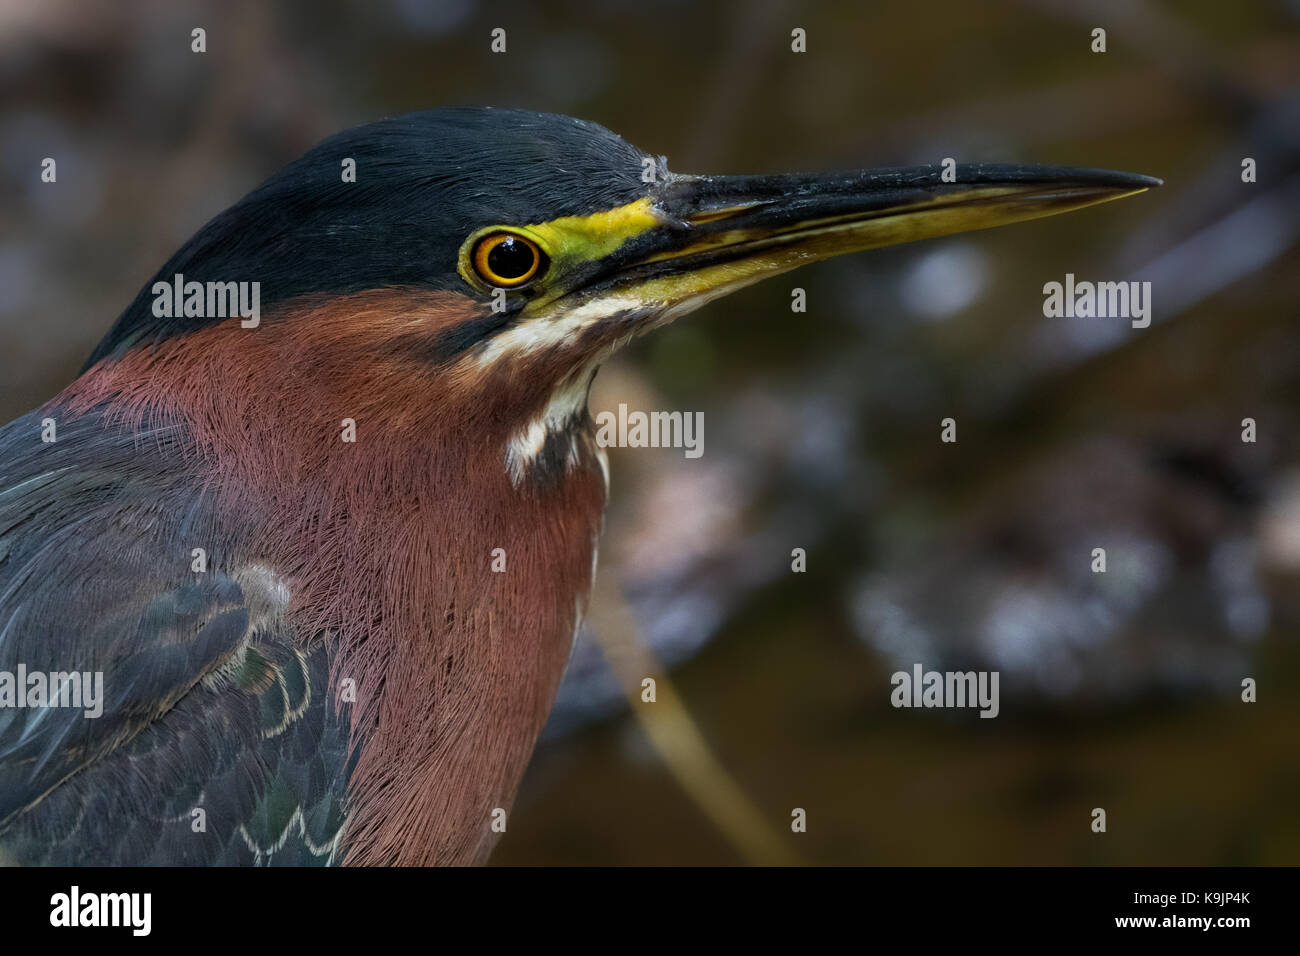 Green Heron Portrait Stock Photo - Alamy